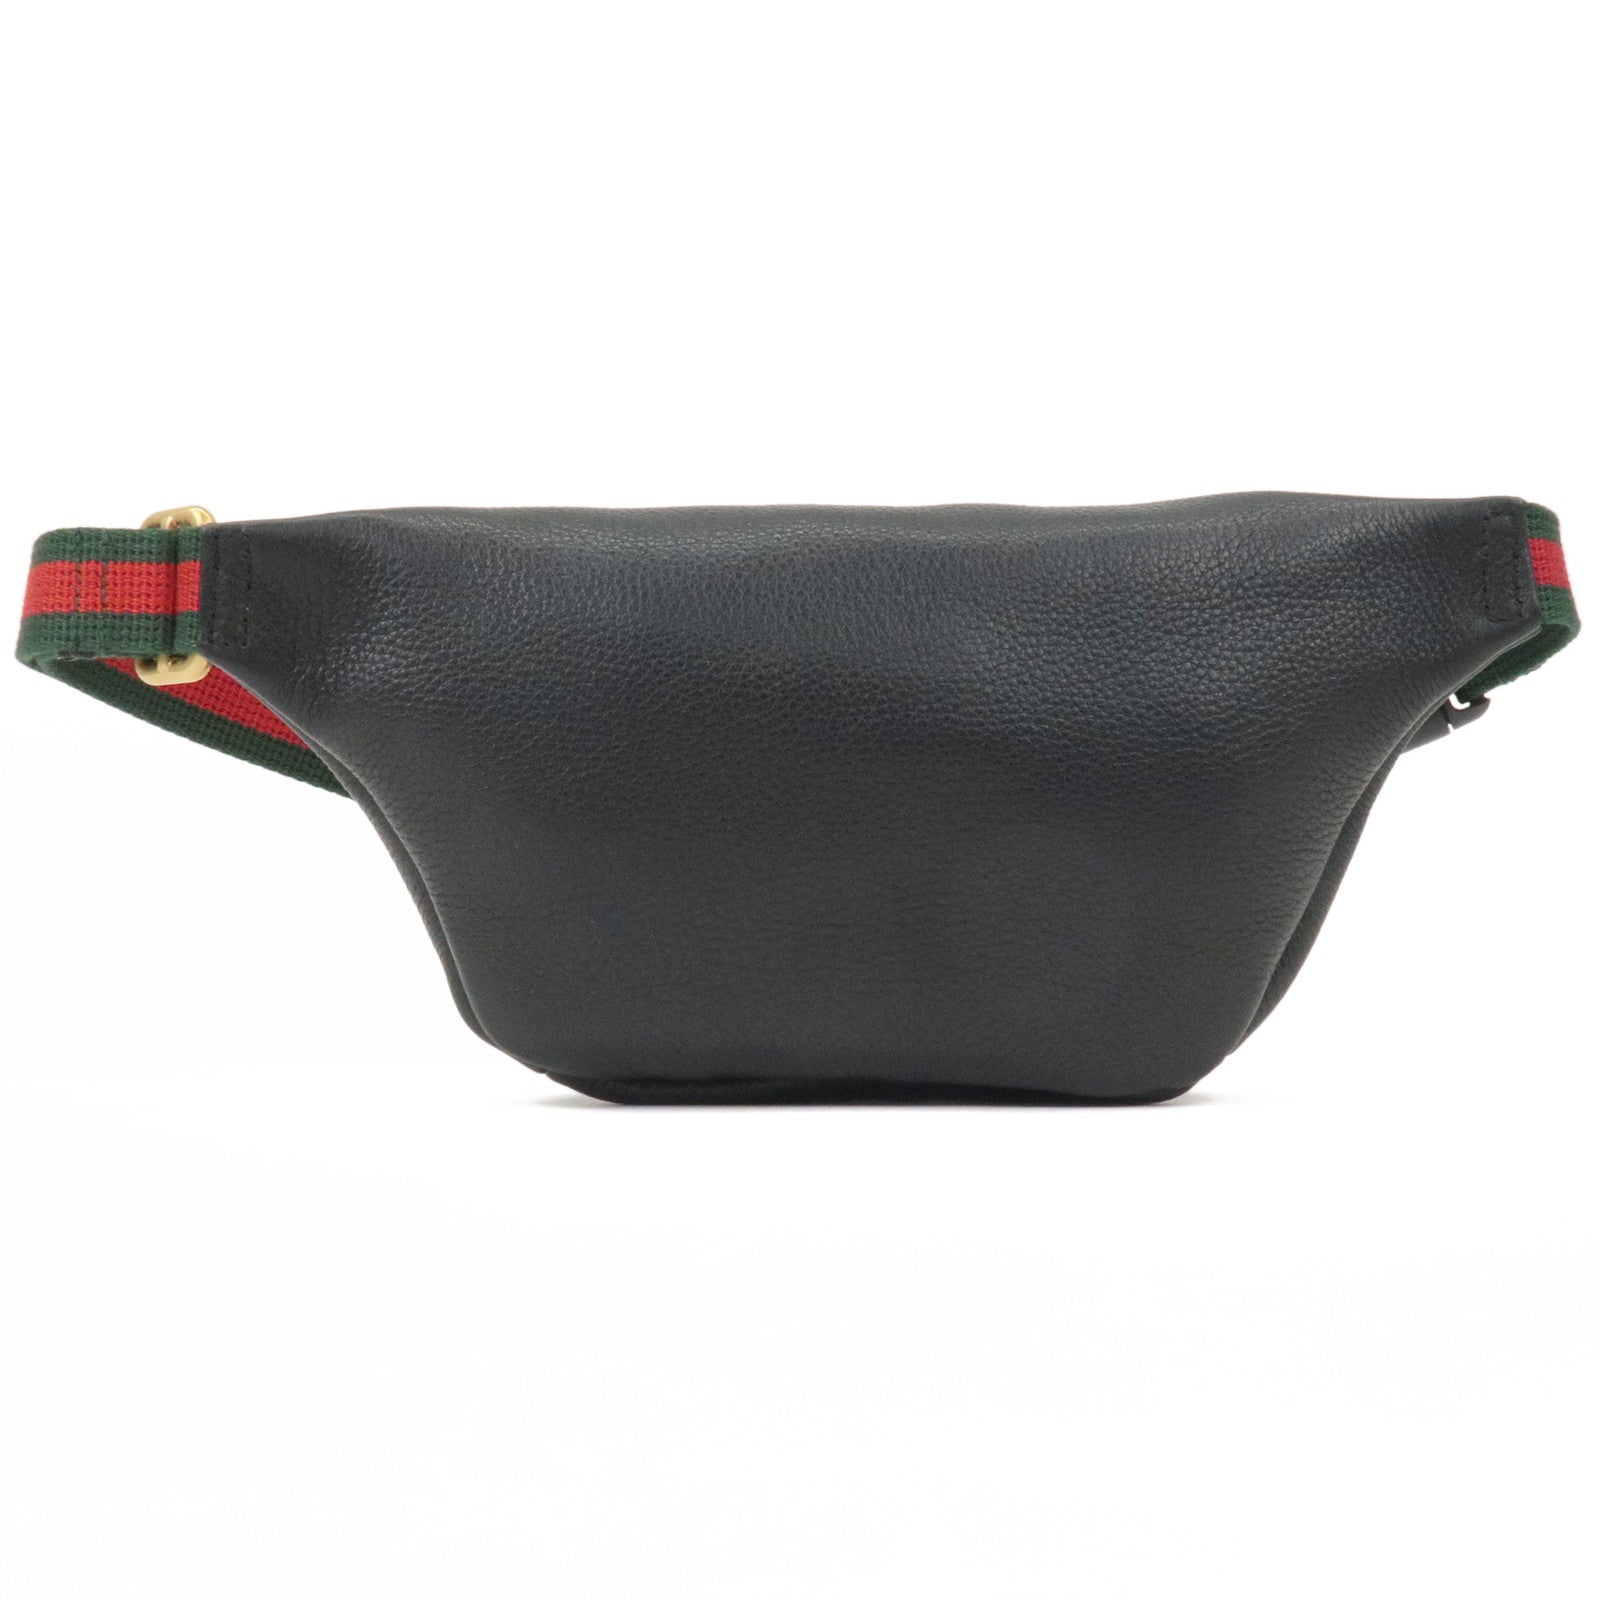 GUCCI Print Leather Black Belt Waist Bum Bag Small 527792